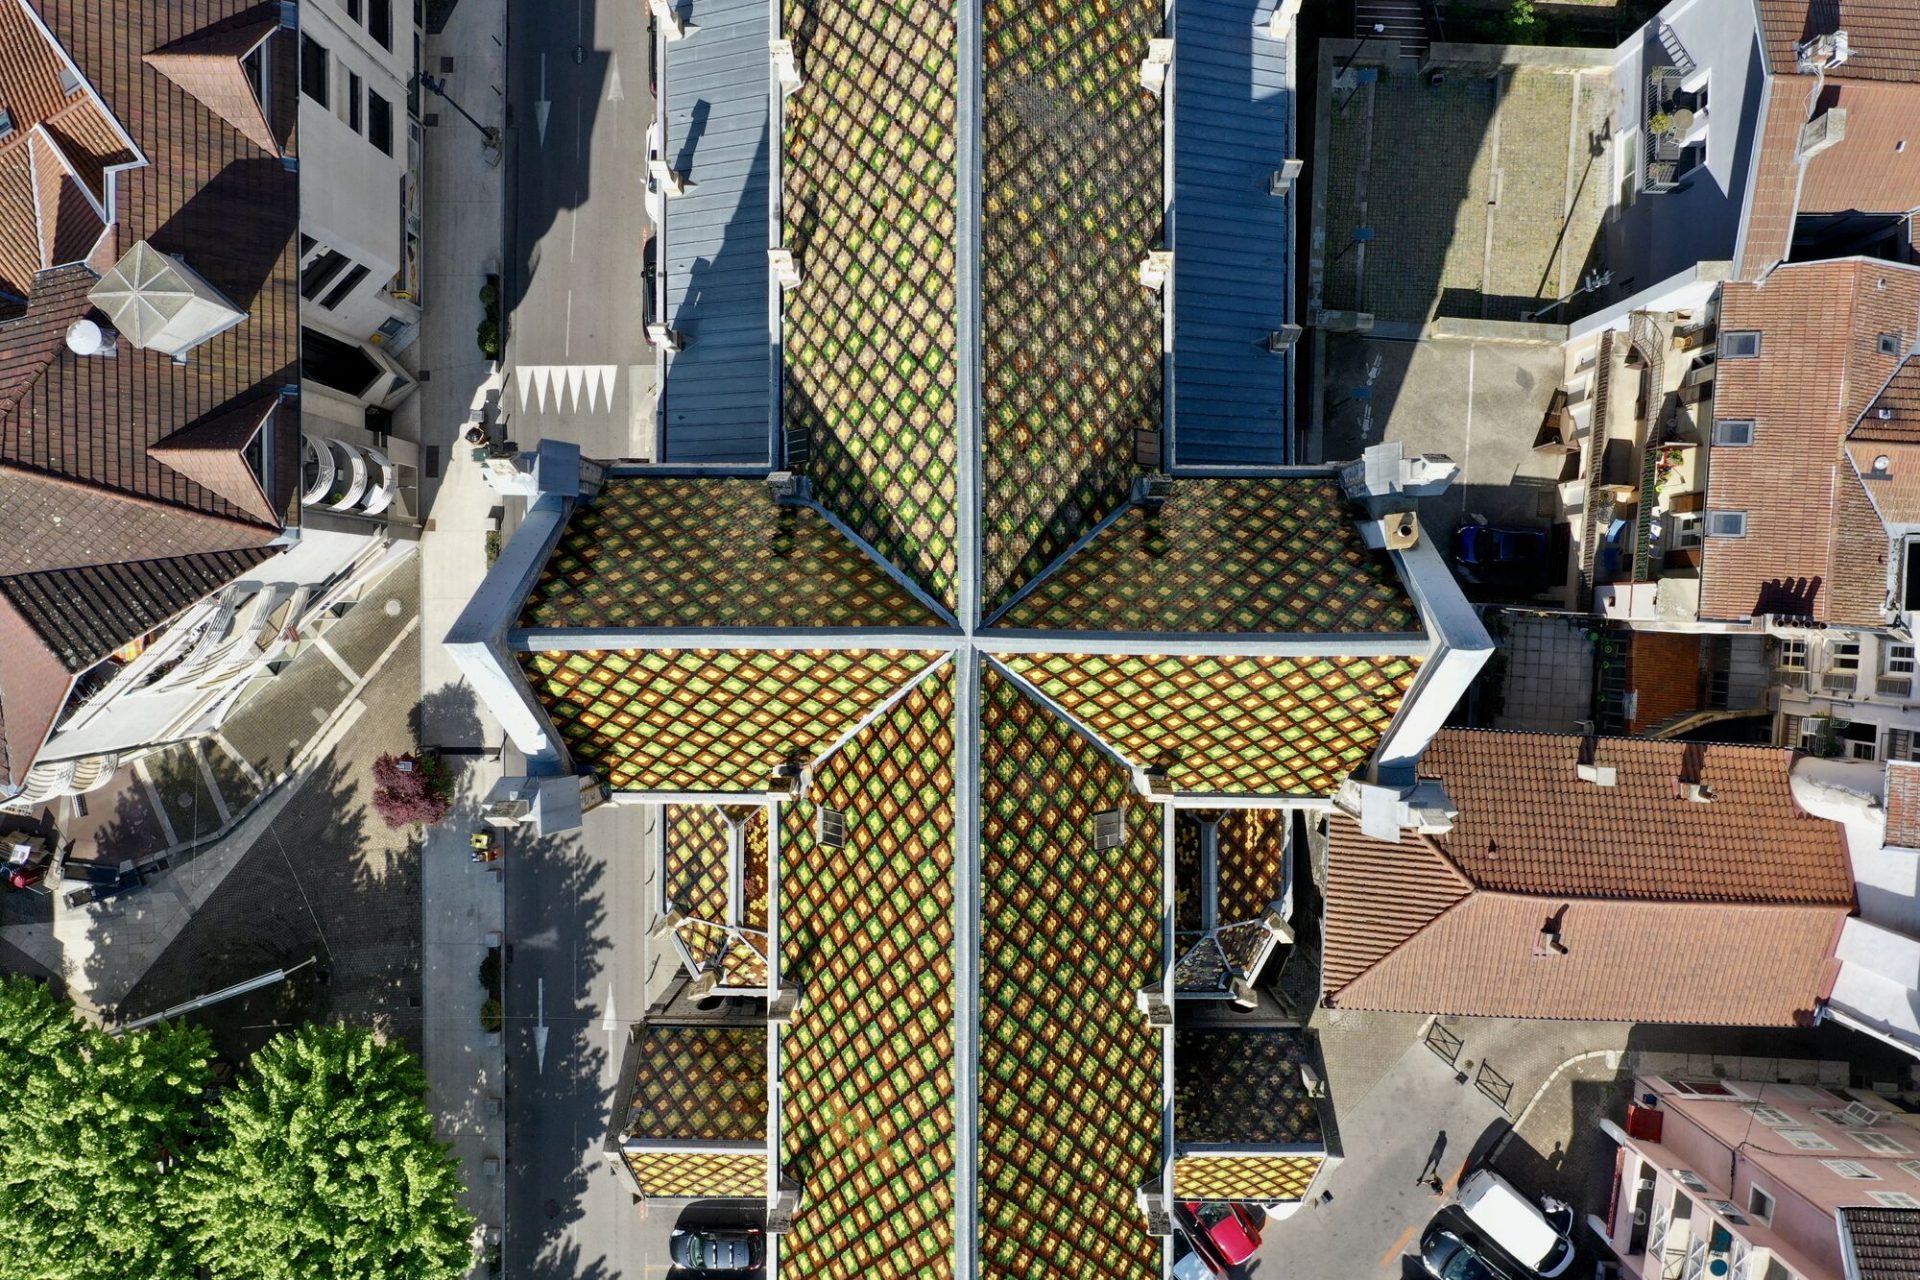 Roof Saint Bruno Voiron church drone view